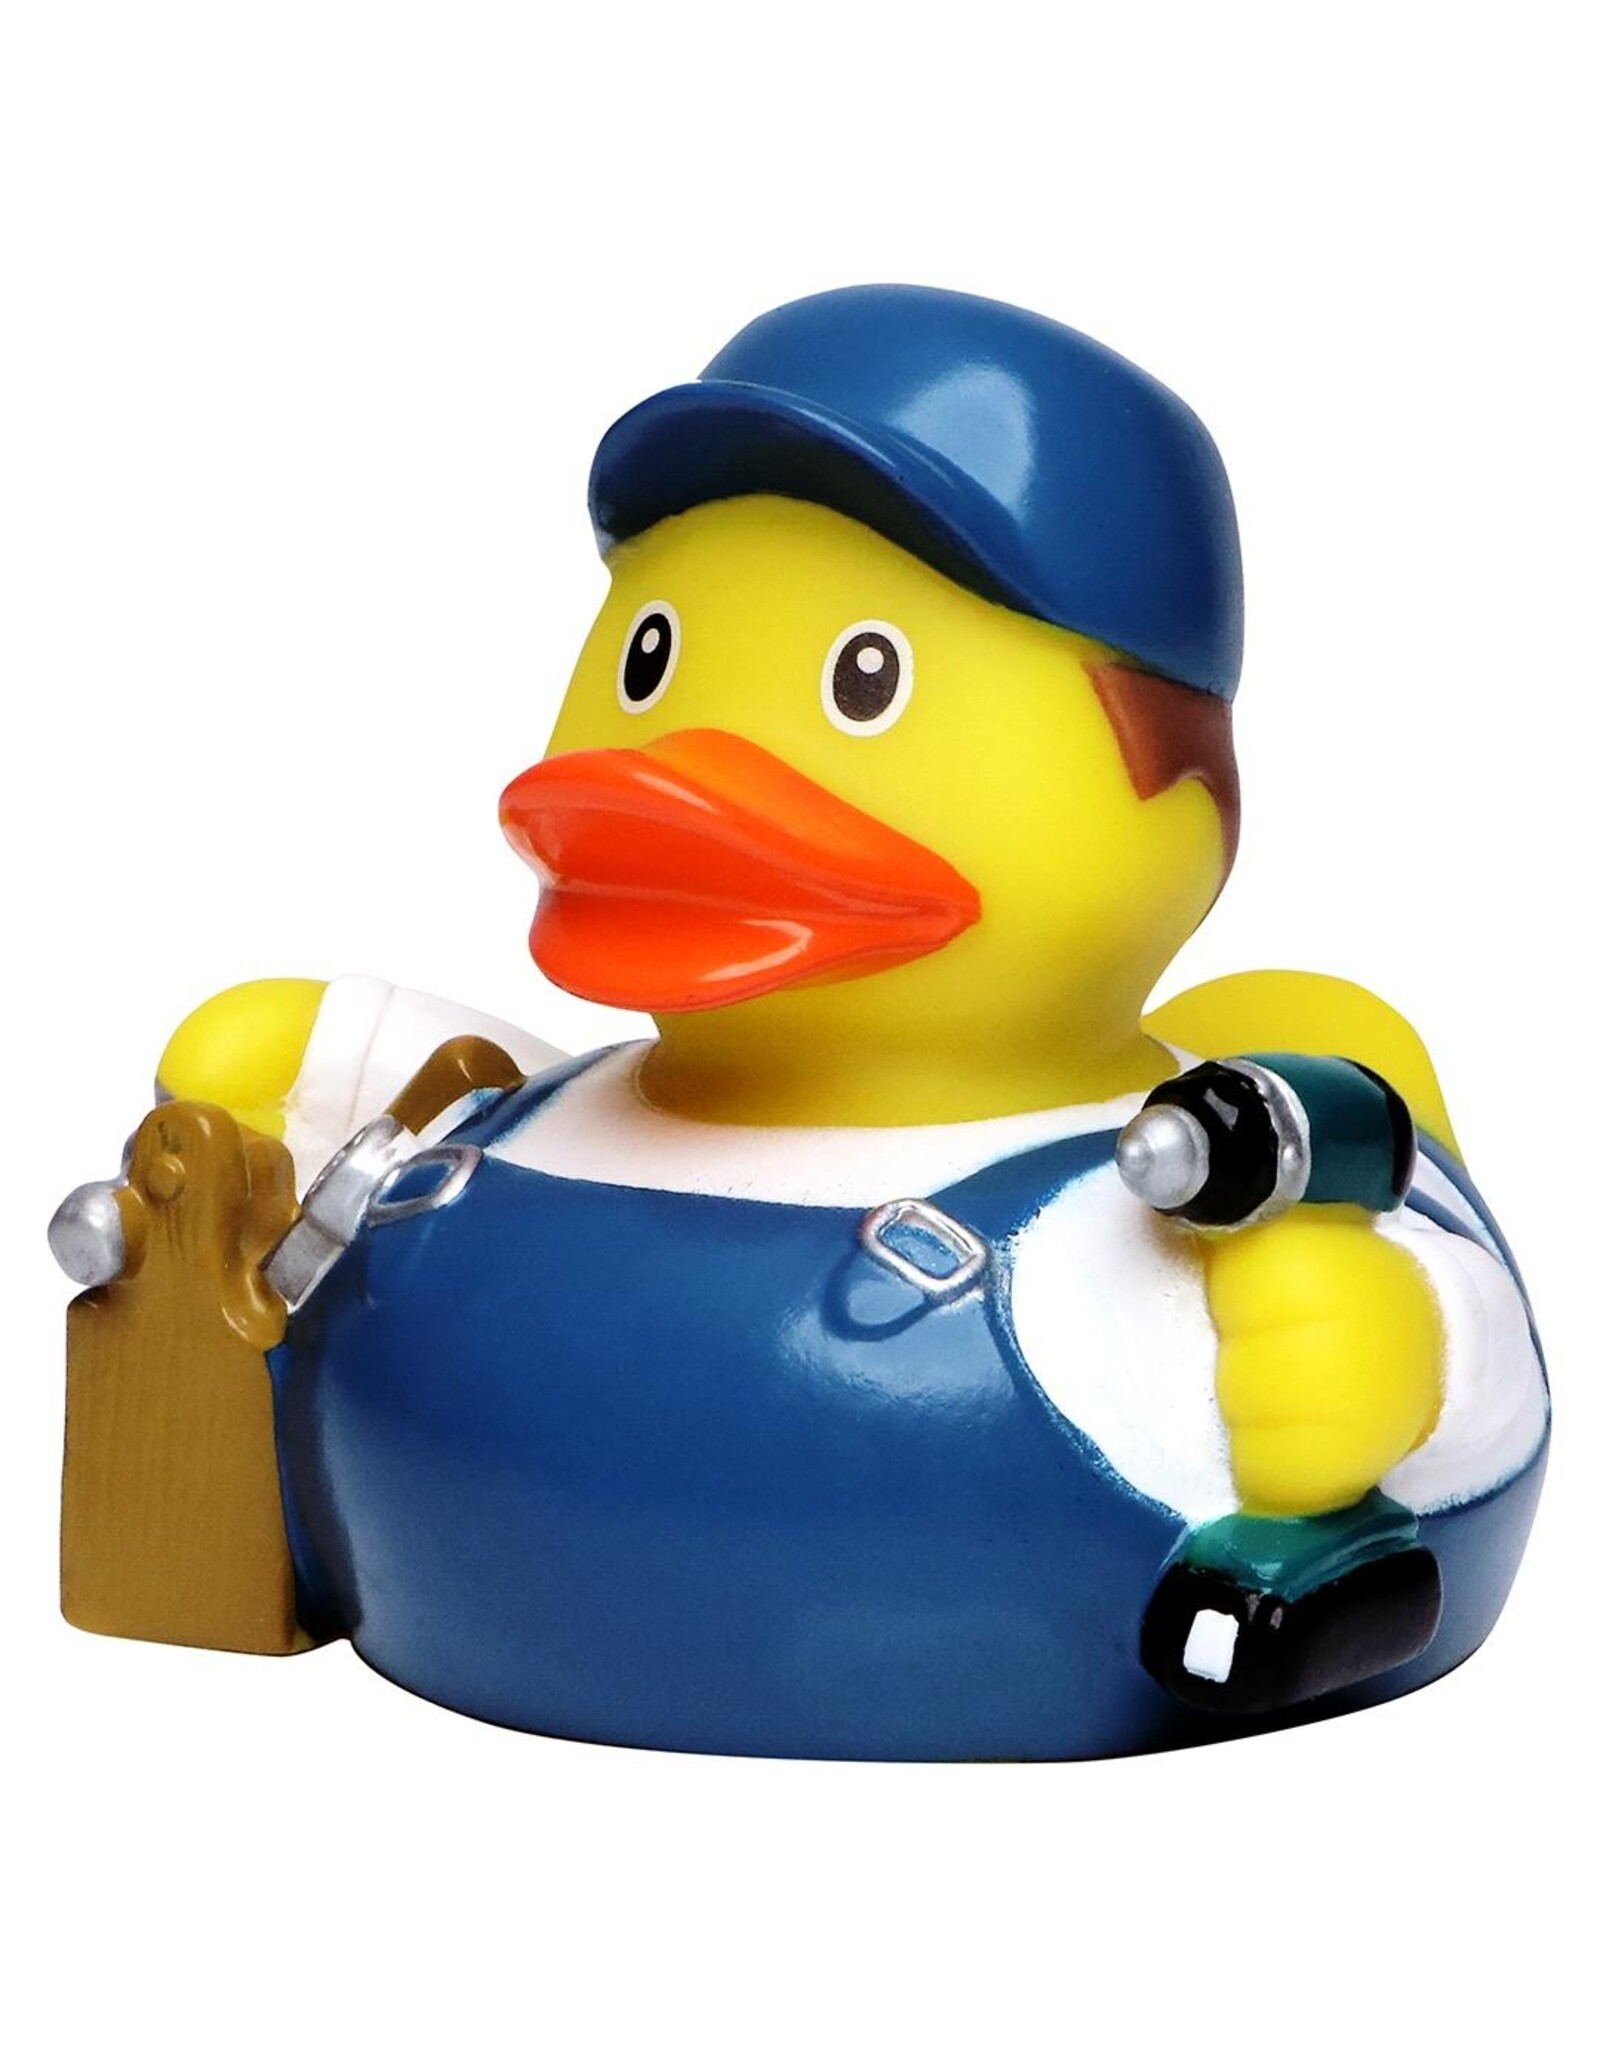 Repairman Rubber Duck